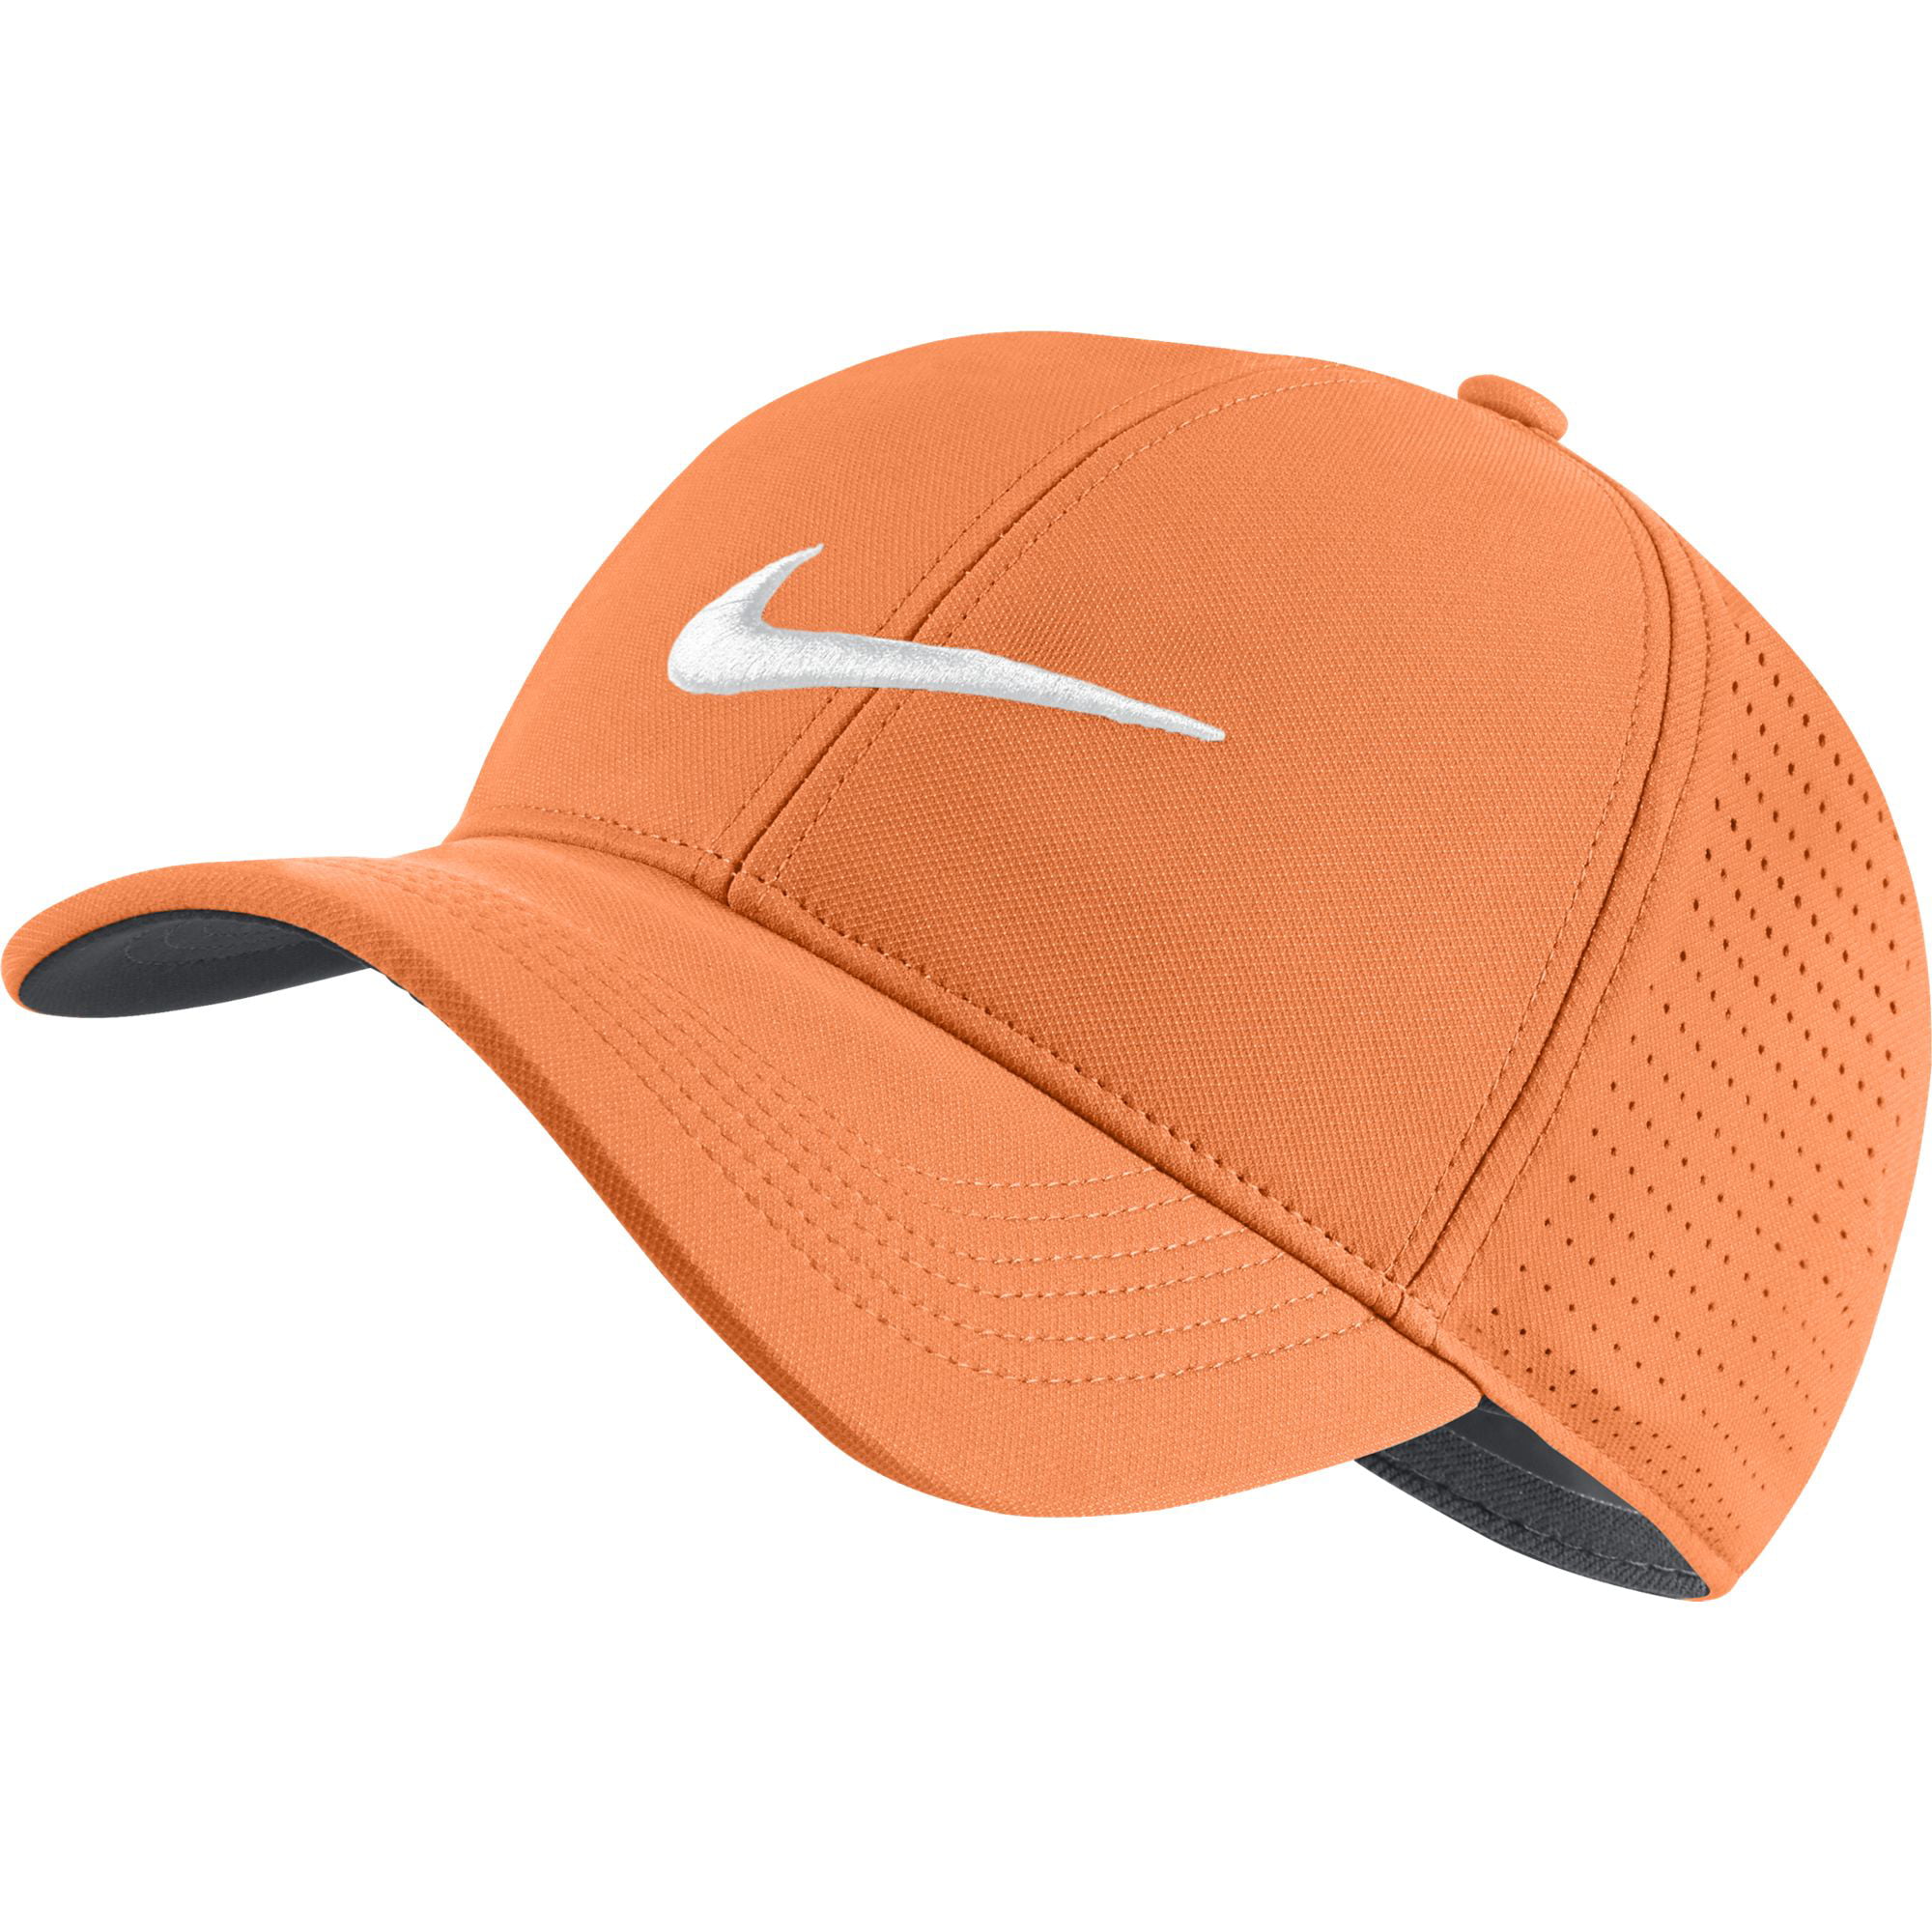 NEW Nike AeroBill Perforated Orange/White Adjustable Golf Hat/Cap ...